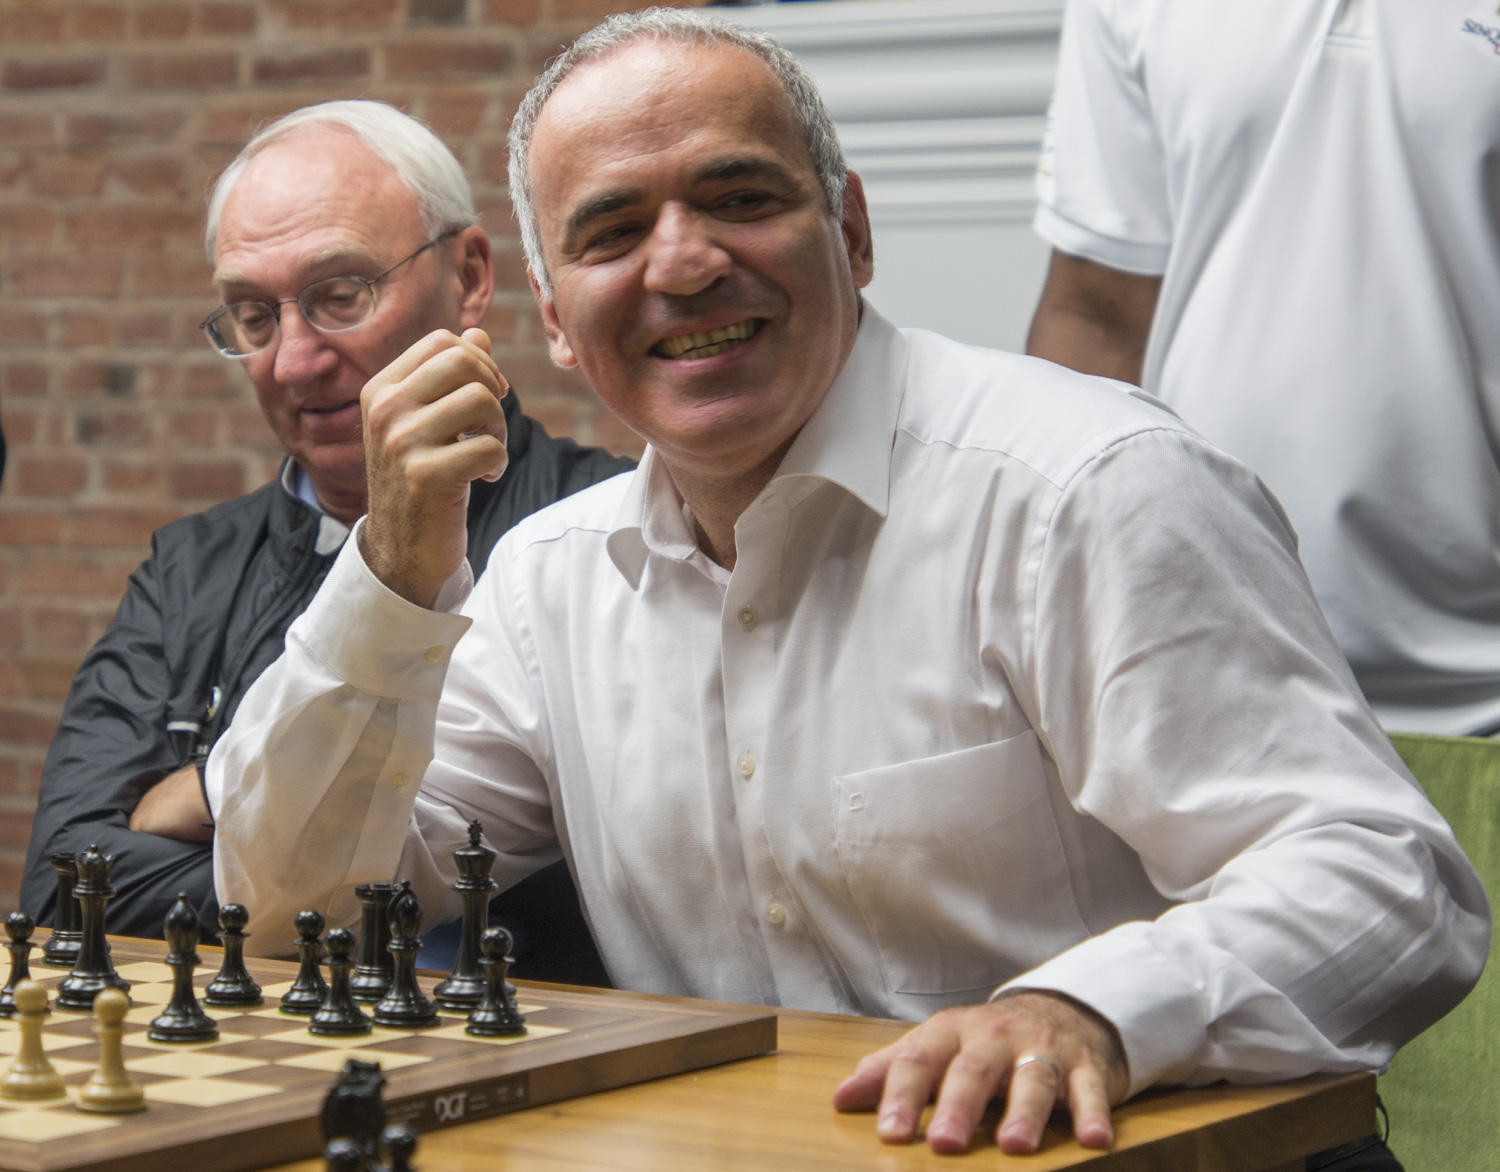 on-chess-legendary-kasparov-returns-to-chess-board-st-louis-for